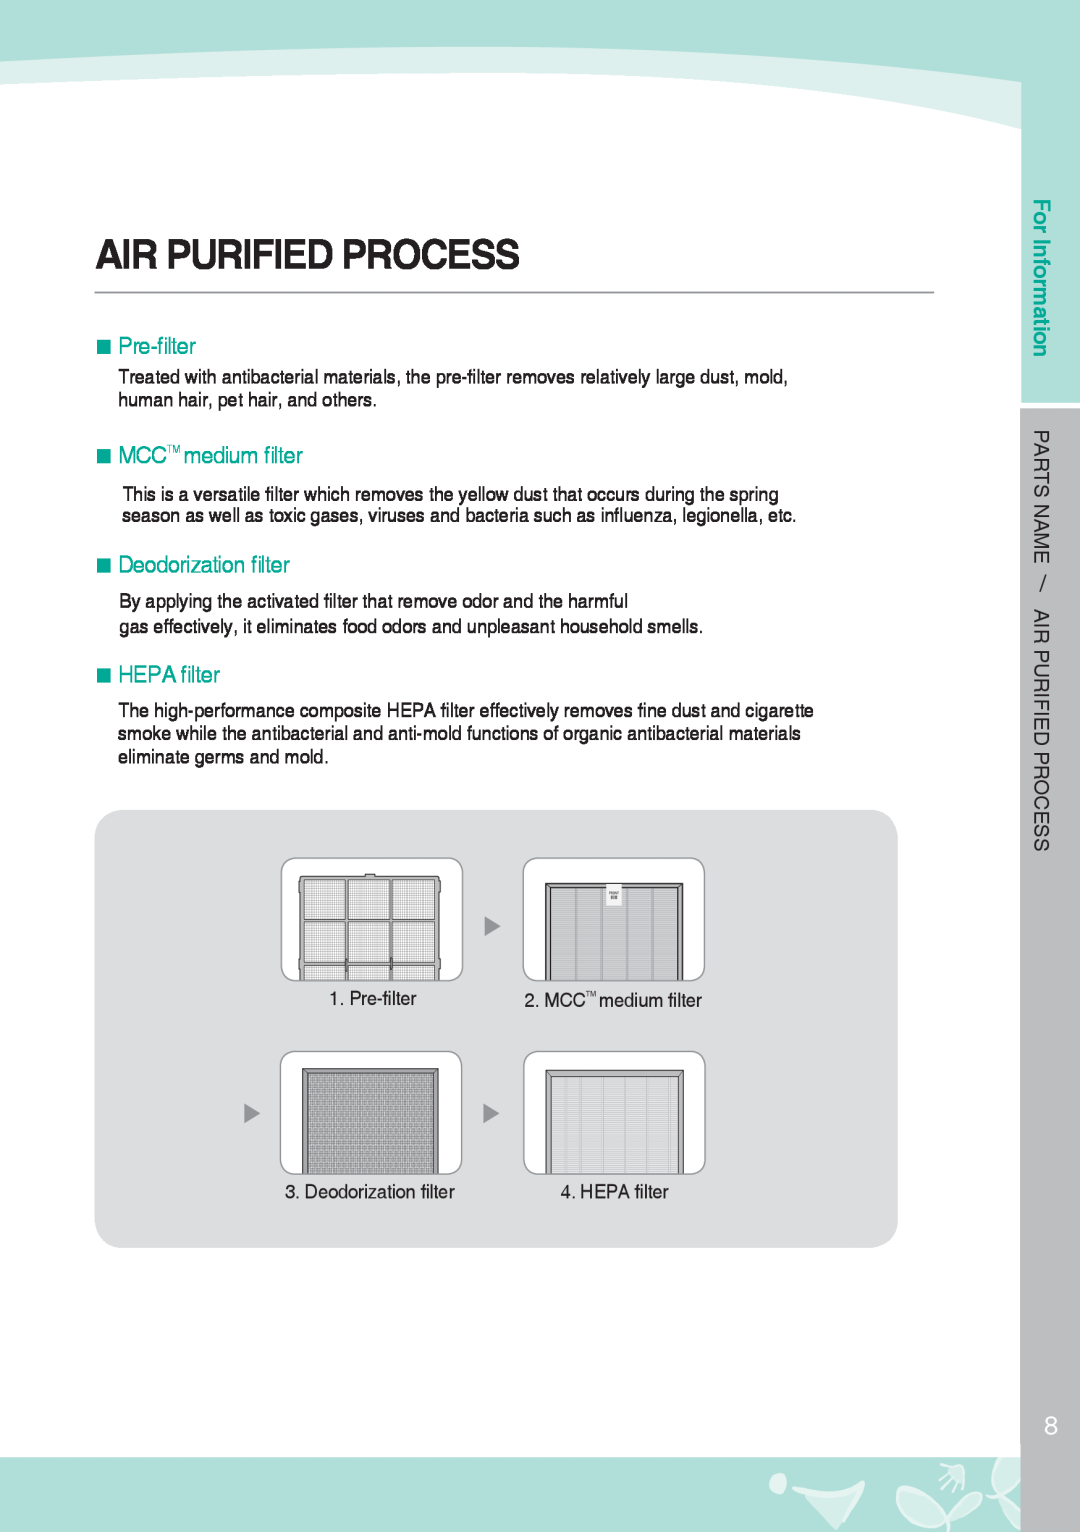 NewAir AP-1008DH Air Purified Process, Pre-filter, MCCTM medium filter, Deodorization filter, HEPA filter, For Information 